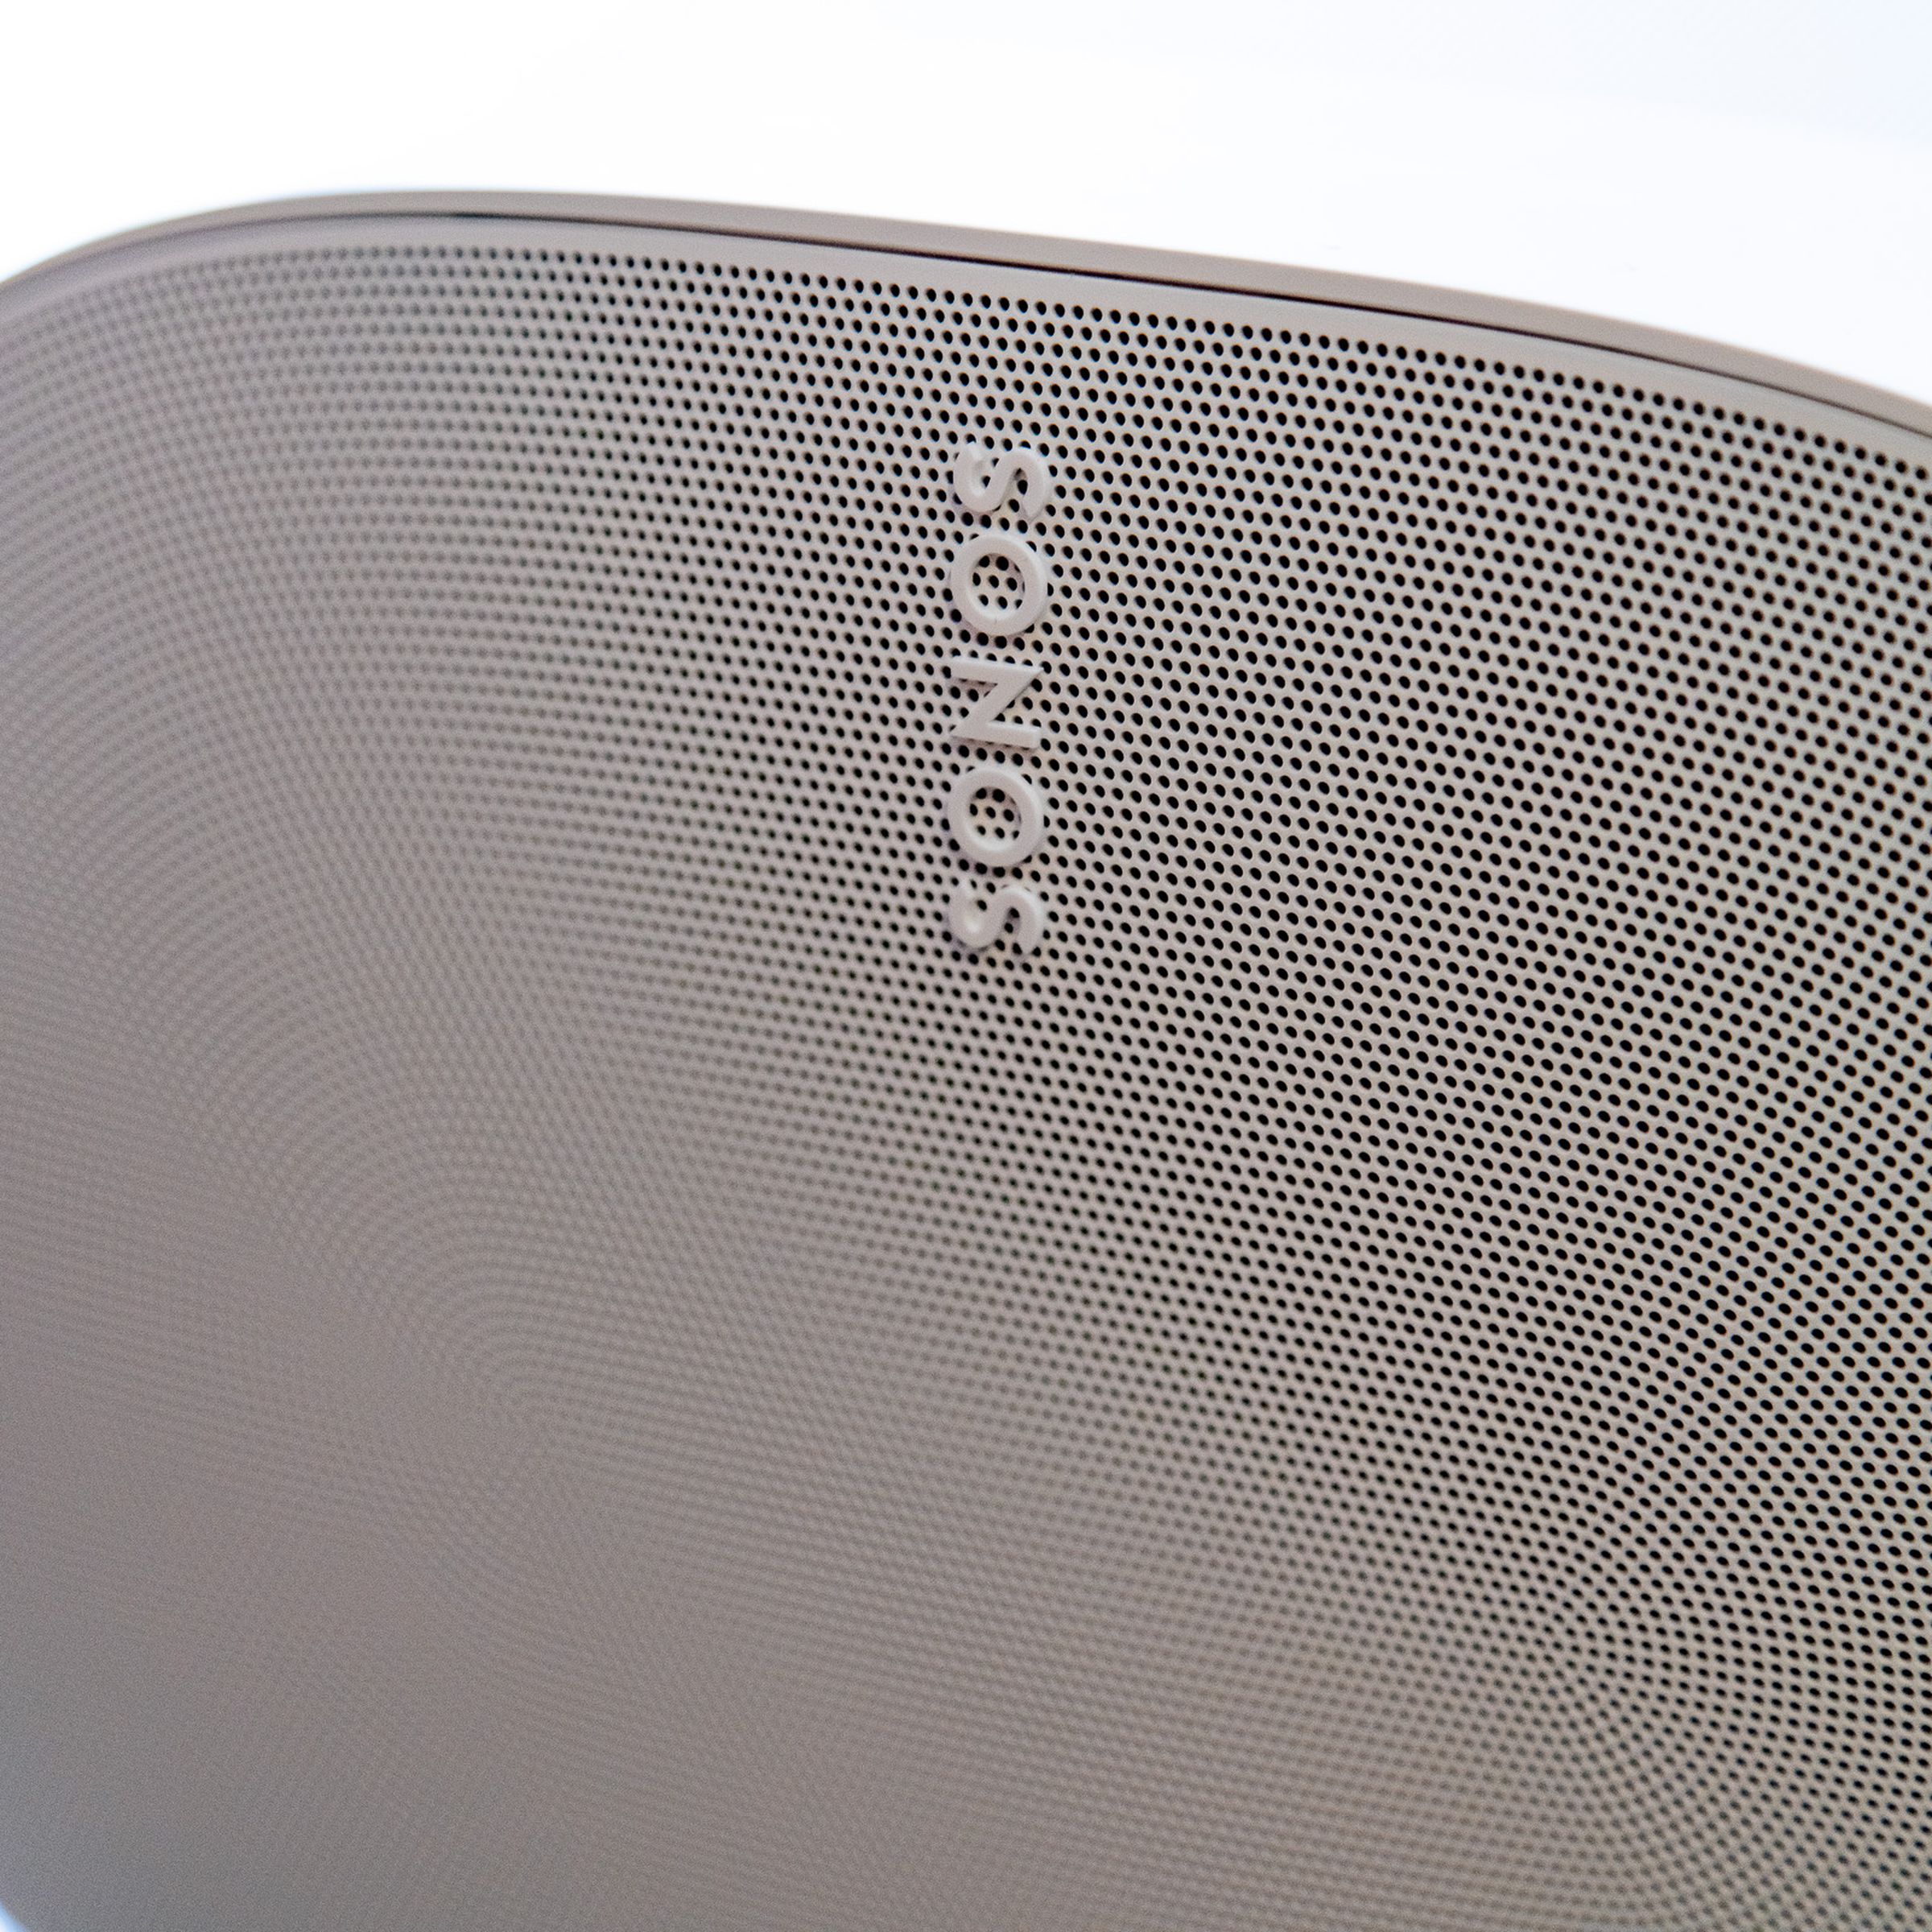 A close-up photo of the Sonos Era 300 speaker.